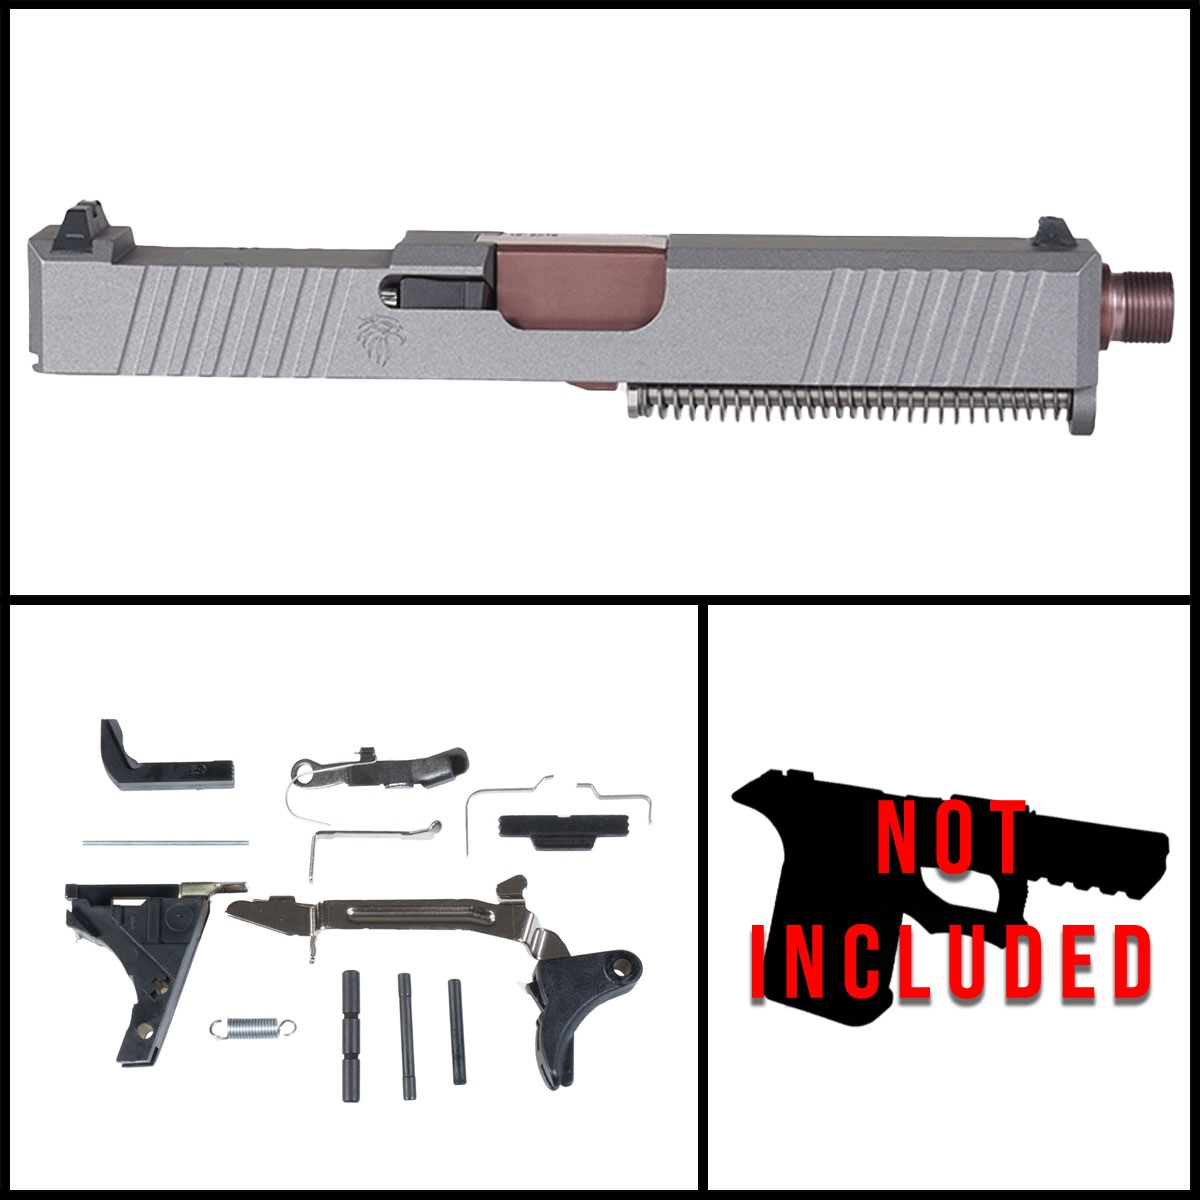 DTT 'Fat Man' 9mm Full Pistol Build Kit (Everything Minus Frame) - Glock 19 Gen 1-3 Compatible